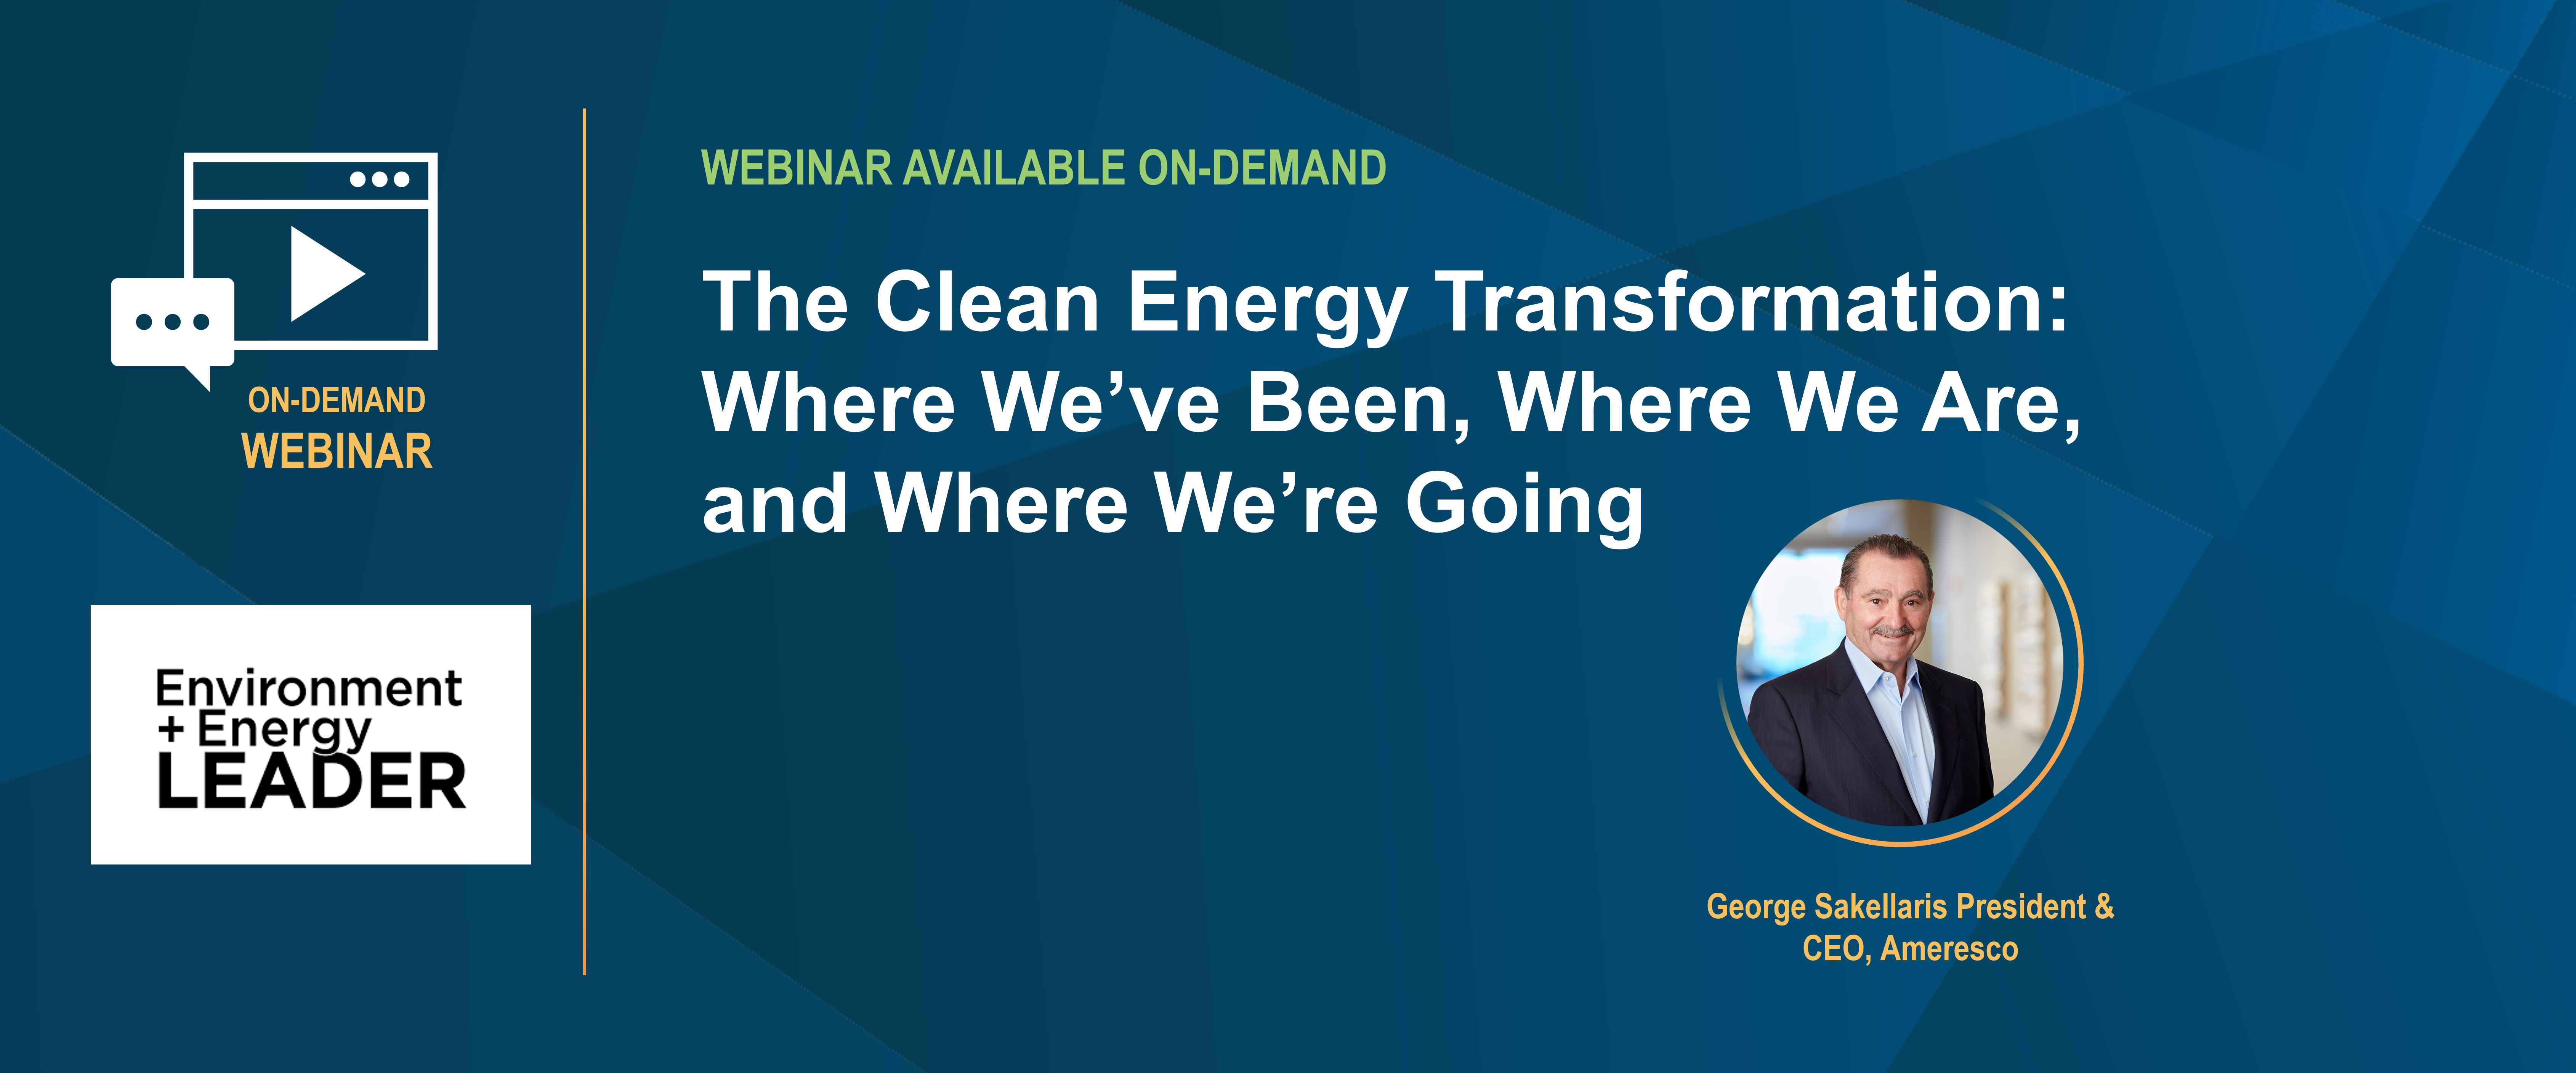 E+E Leader - Clean Energy Transformation Webinar Full Promo Image